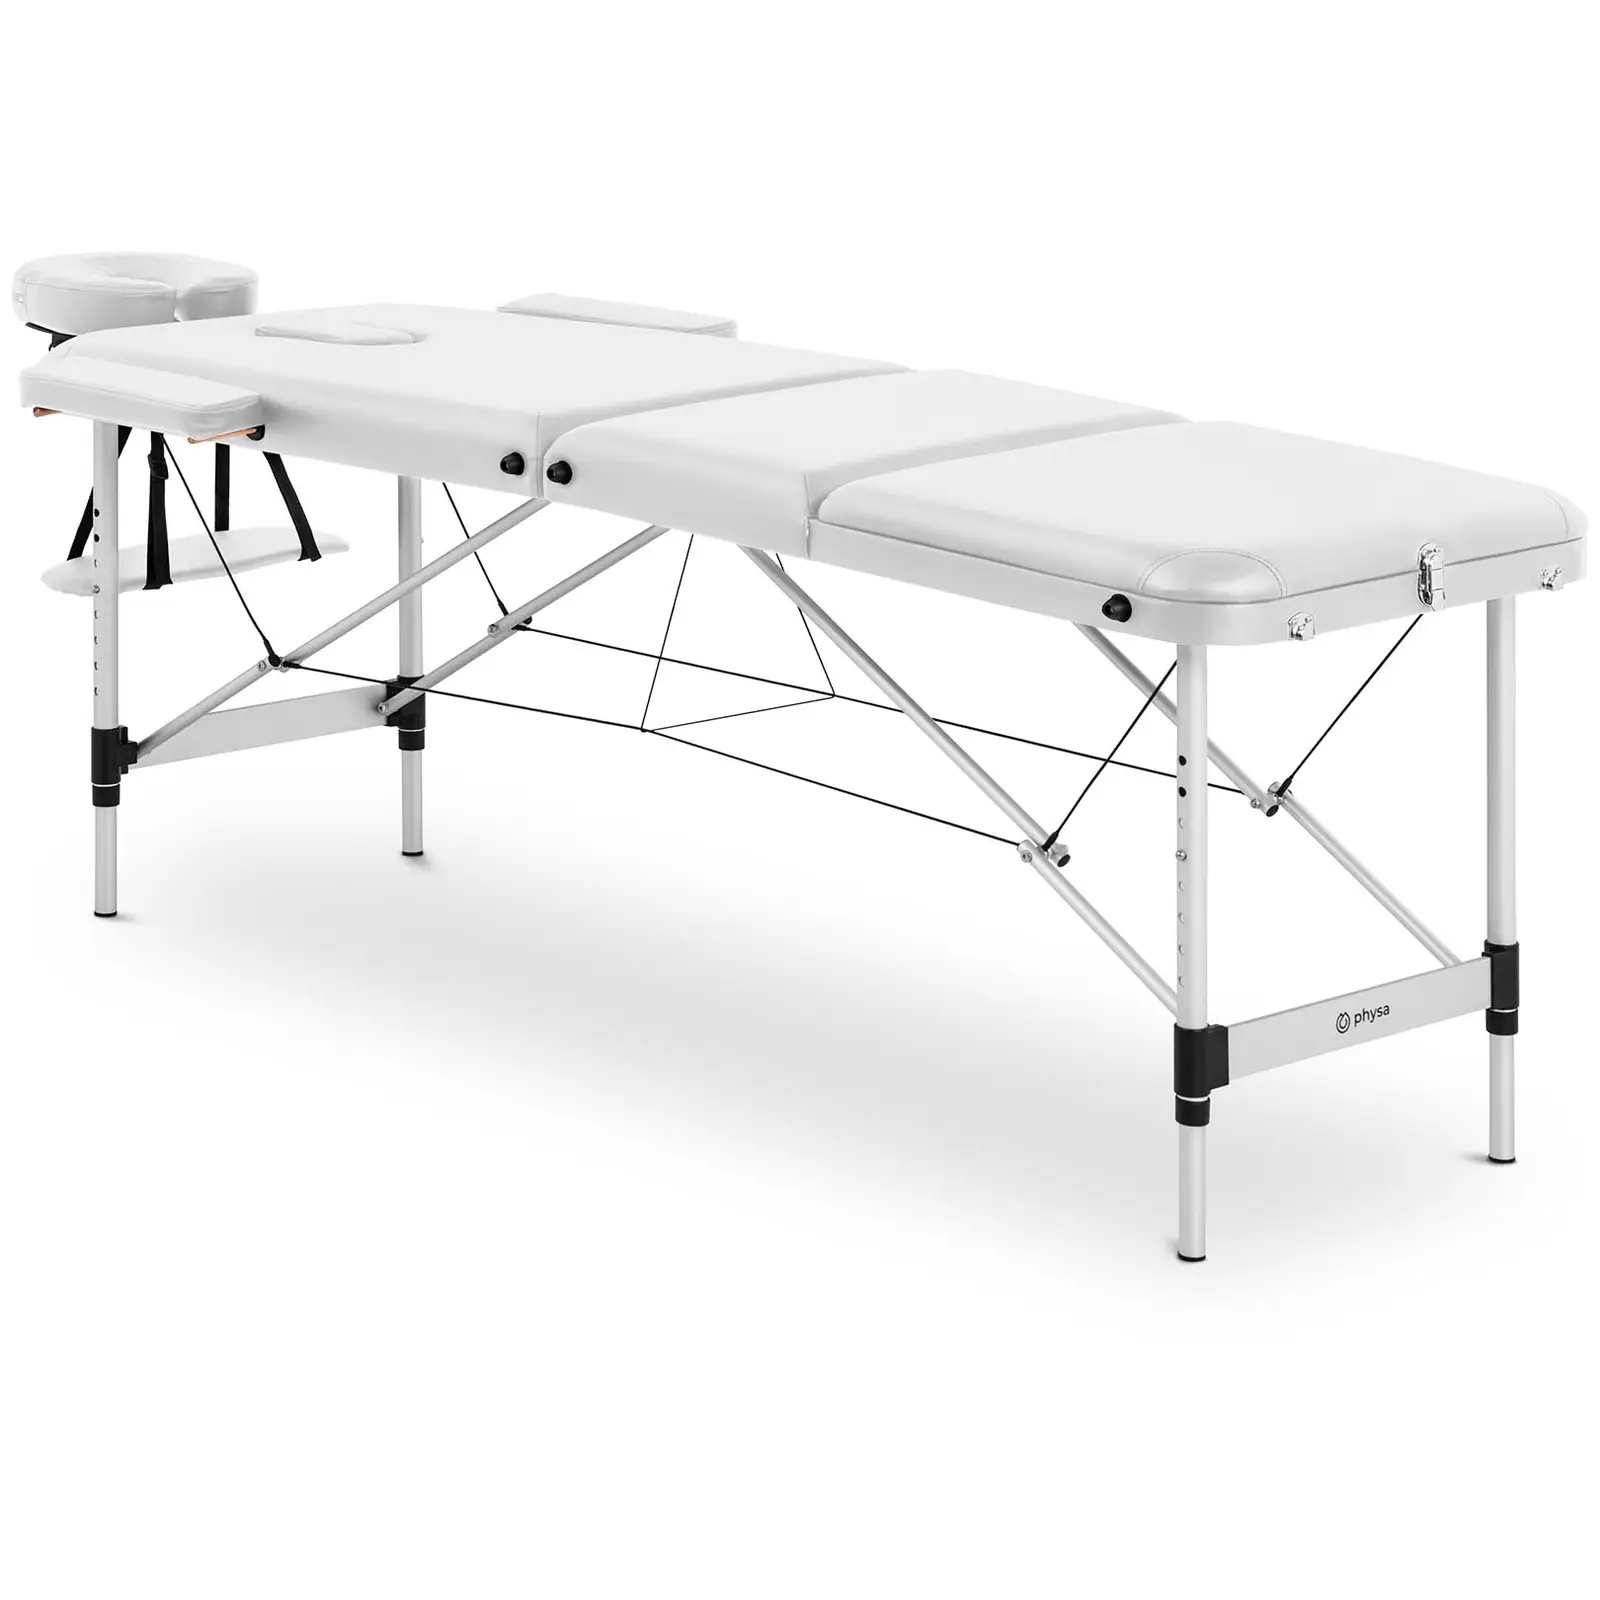 Sammenlegbart massasjebord - 185 x 60 x 59 cm - 180 kg - Fiolett